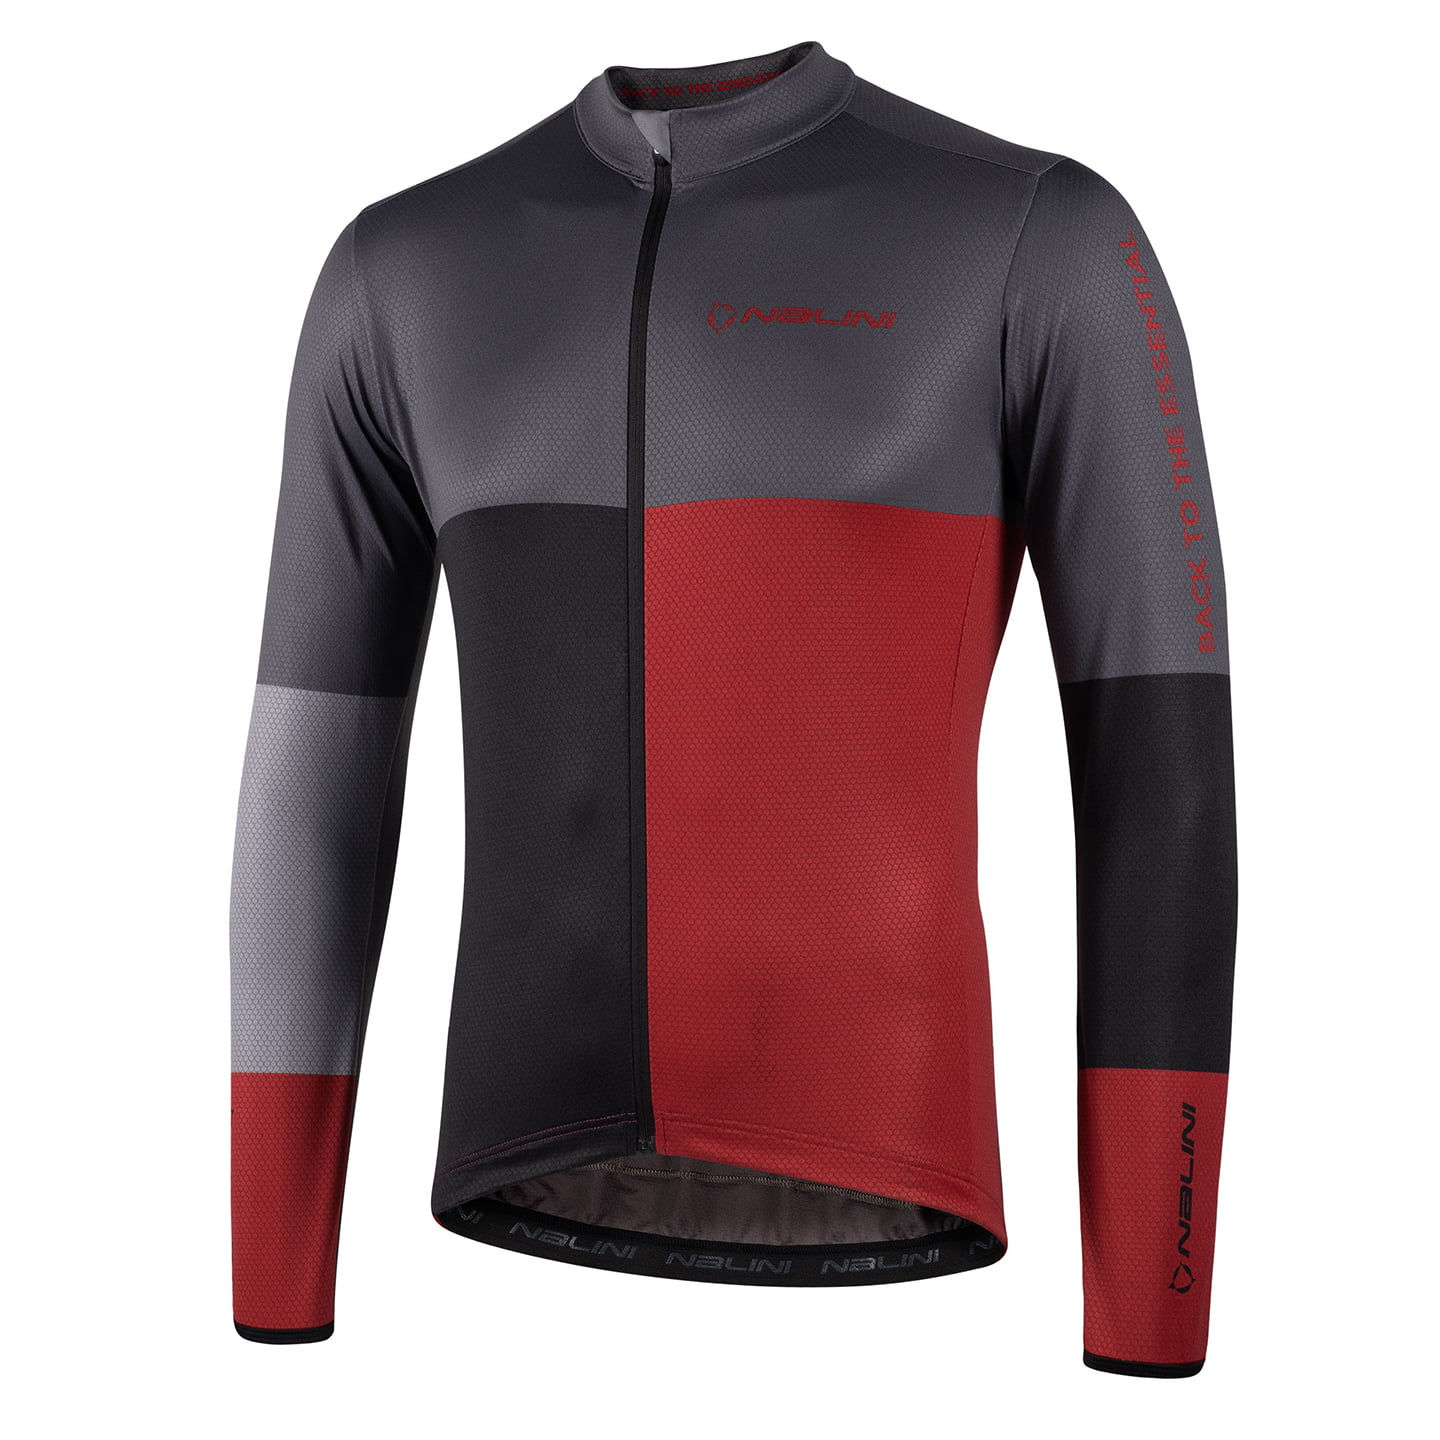 NALINI New Coffee Long Sleeve Jersey Long Sleeve Jersey, for men, size L, Cycling jersey, Cycling clothing